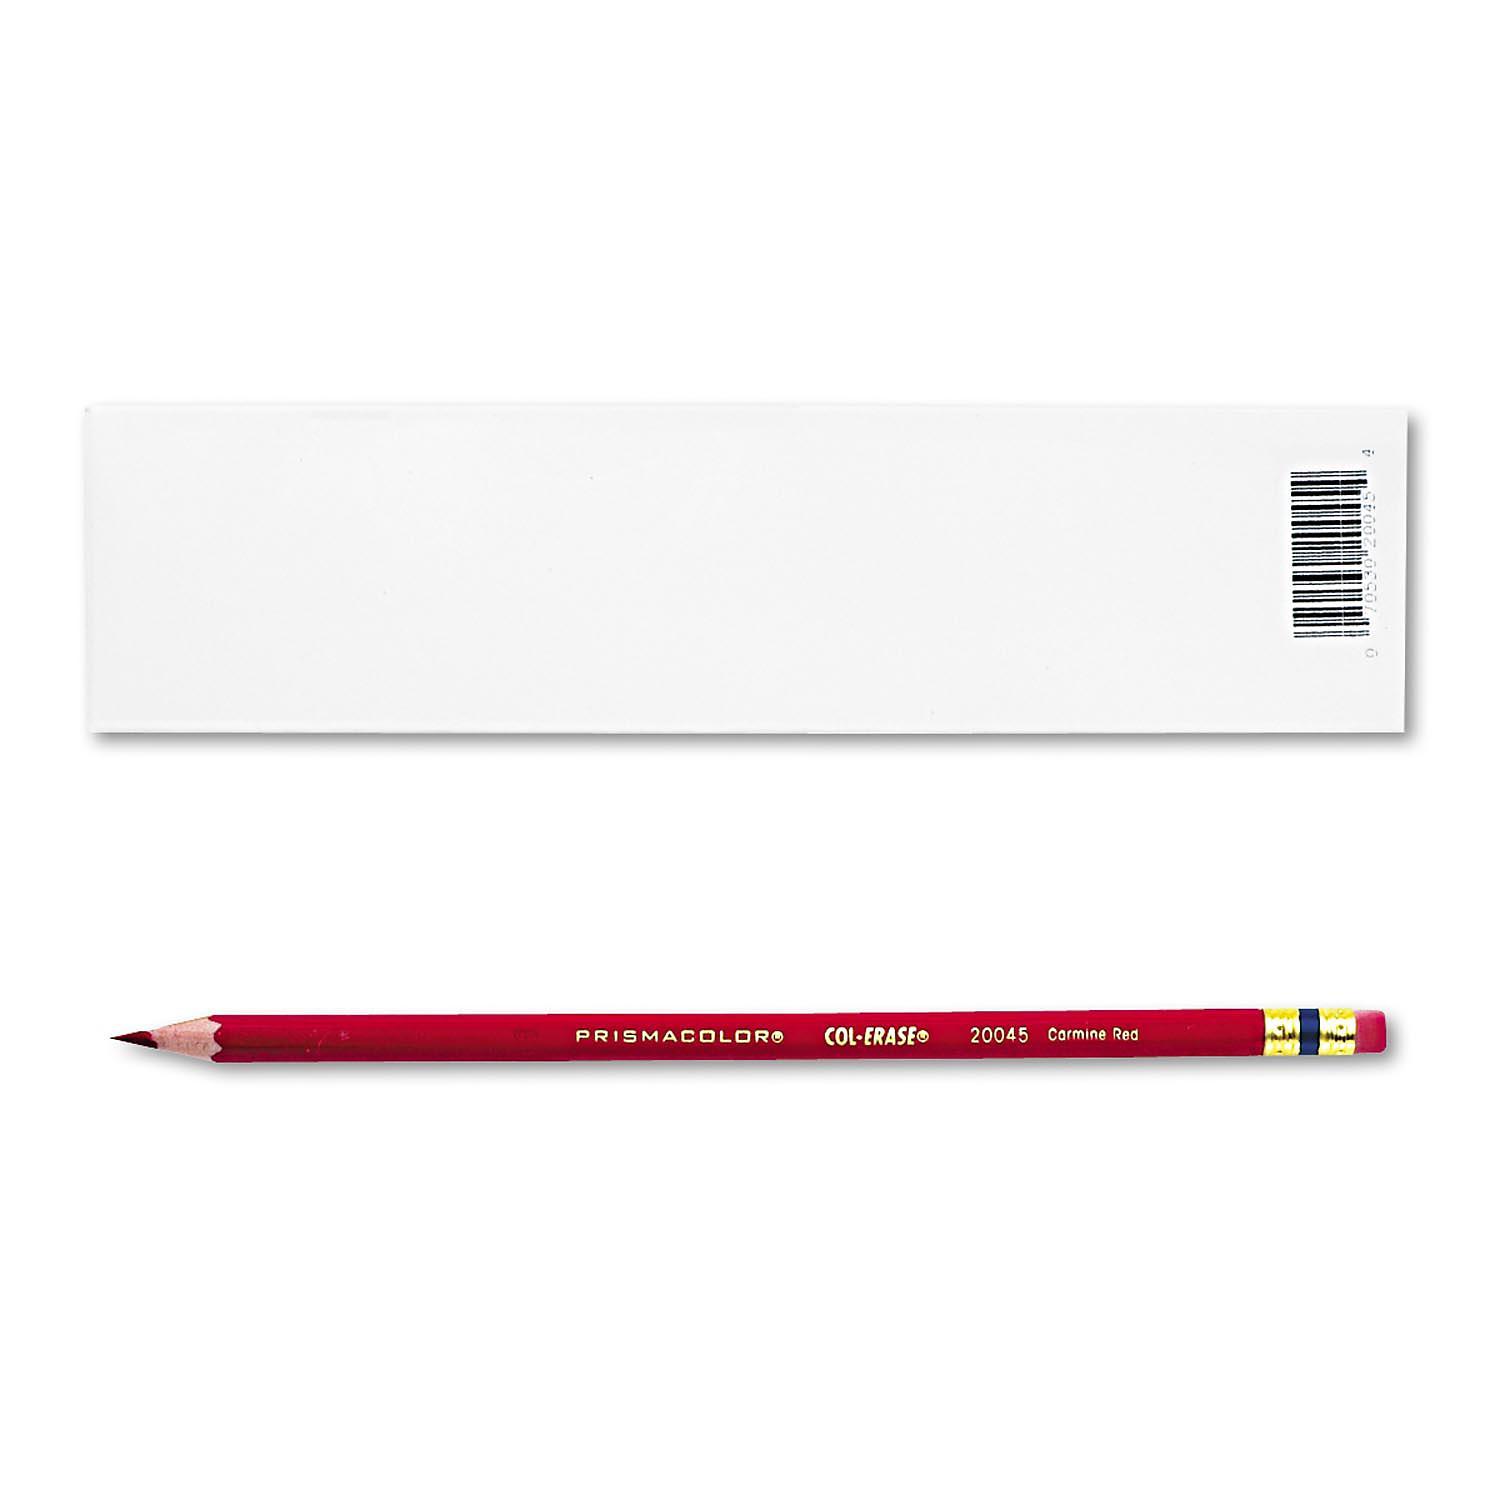 Prismacolor Col-Erase Erasable Colored Pencils, Carmine Red, Box of 12 - image 3 of 3